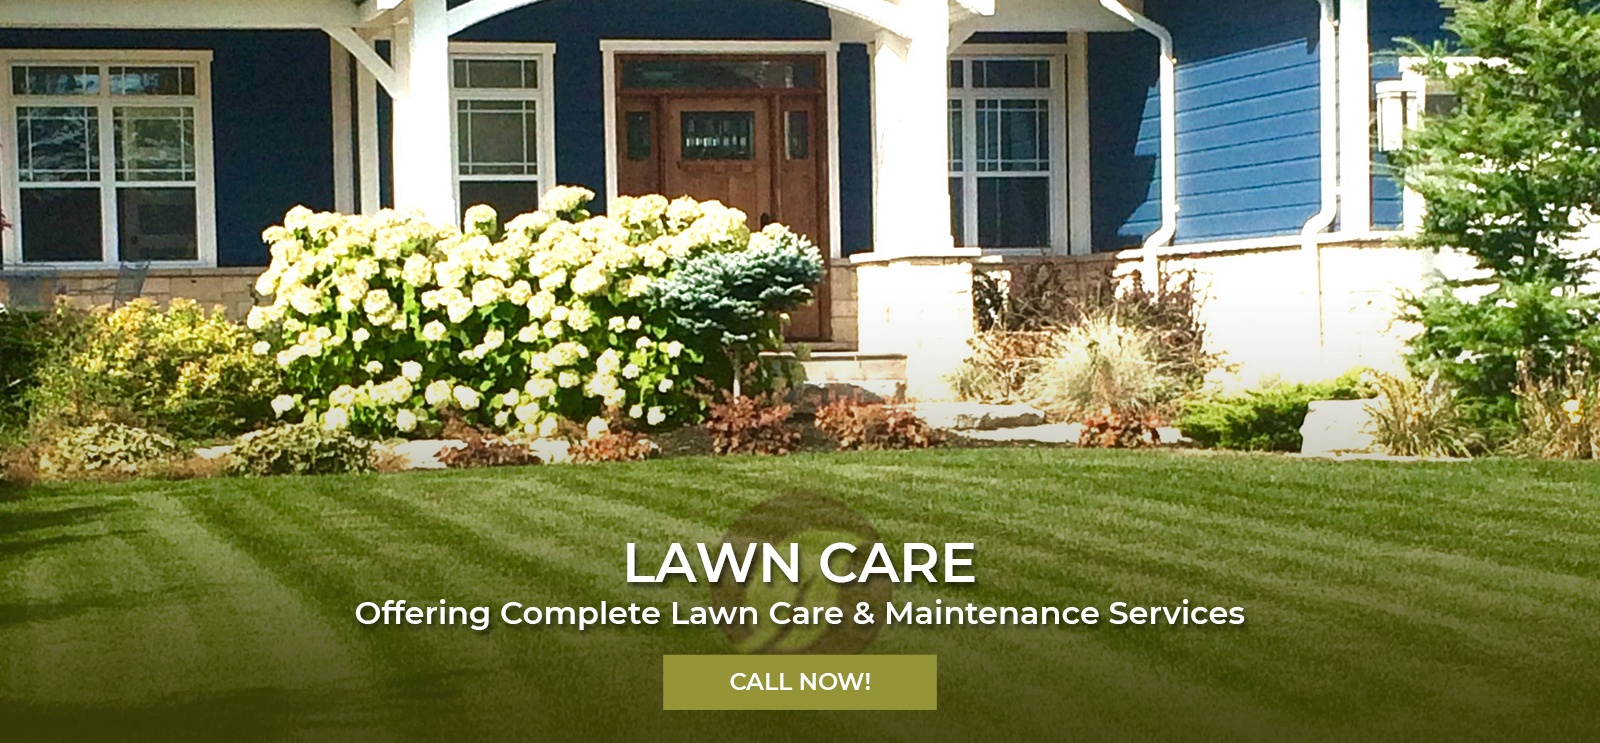 Complete Lawn Care & Maintenance Services